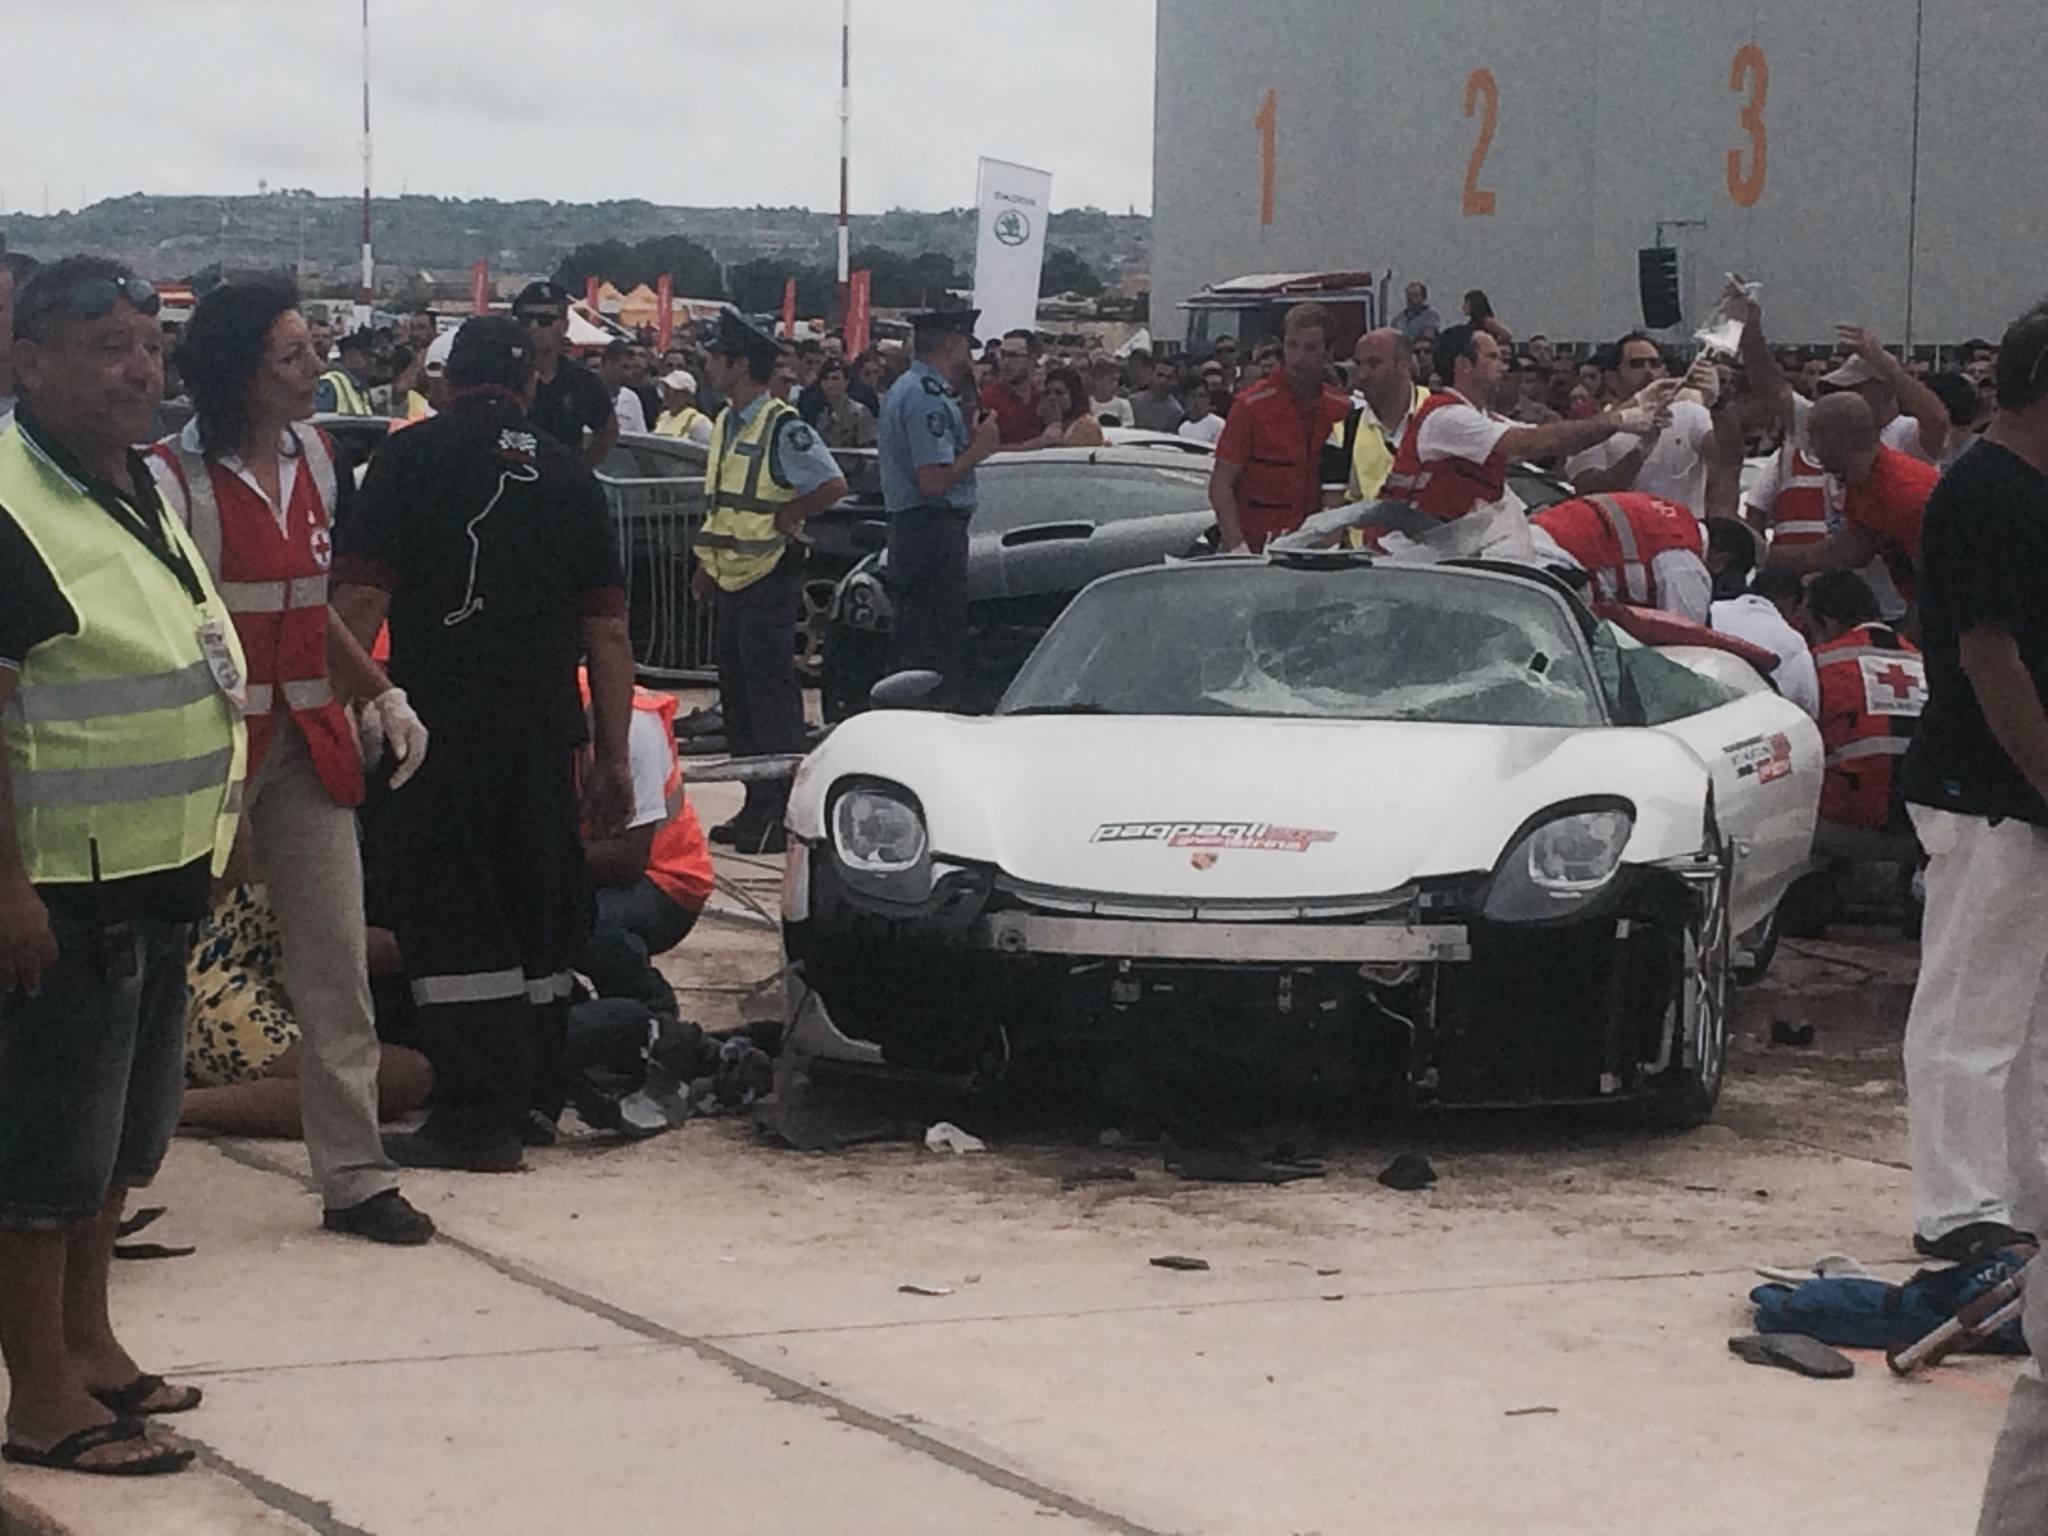 26 People Injured After Porsche 918 Crashed Into Spectators At Supercar